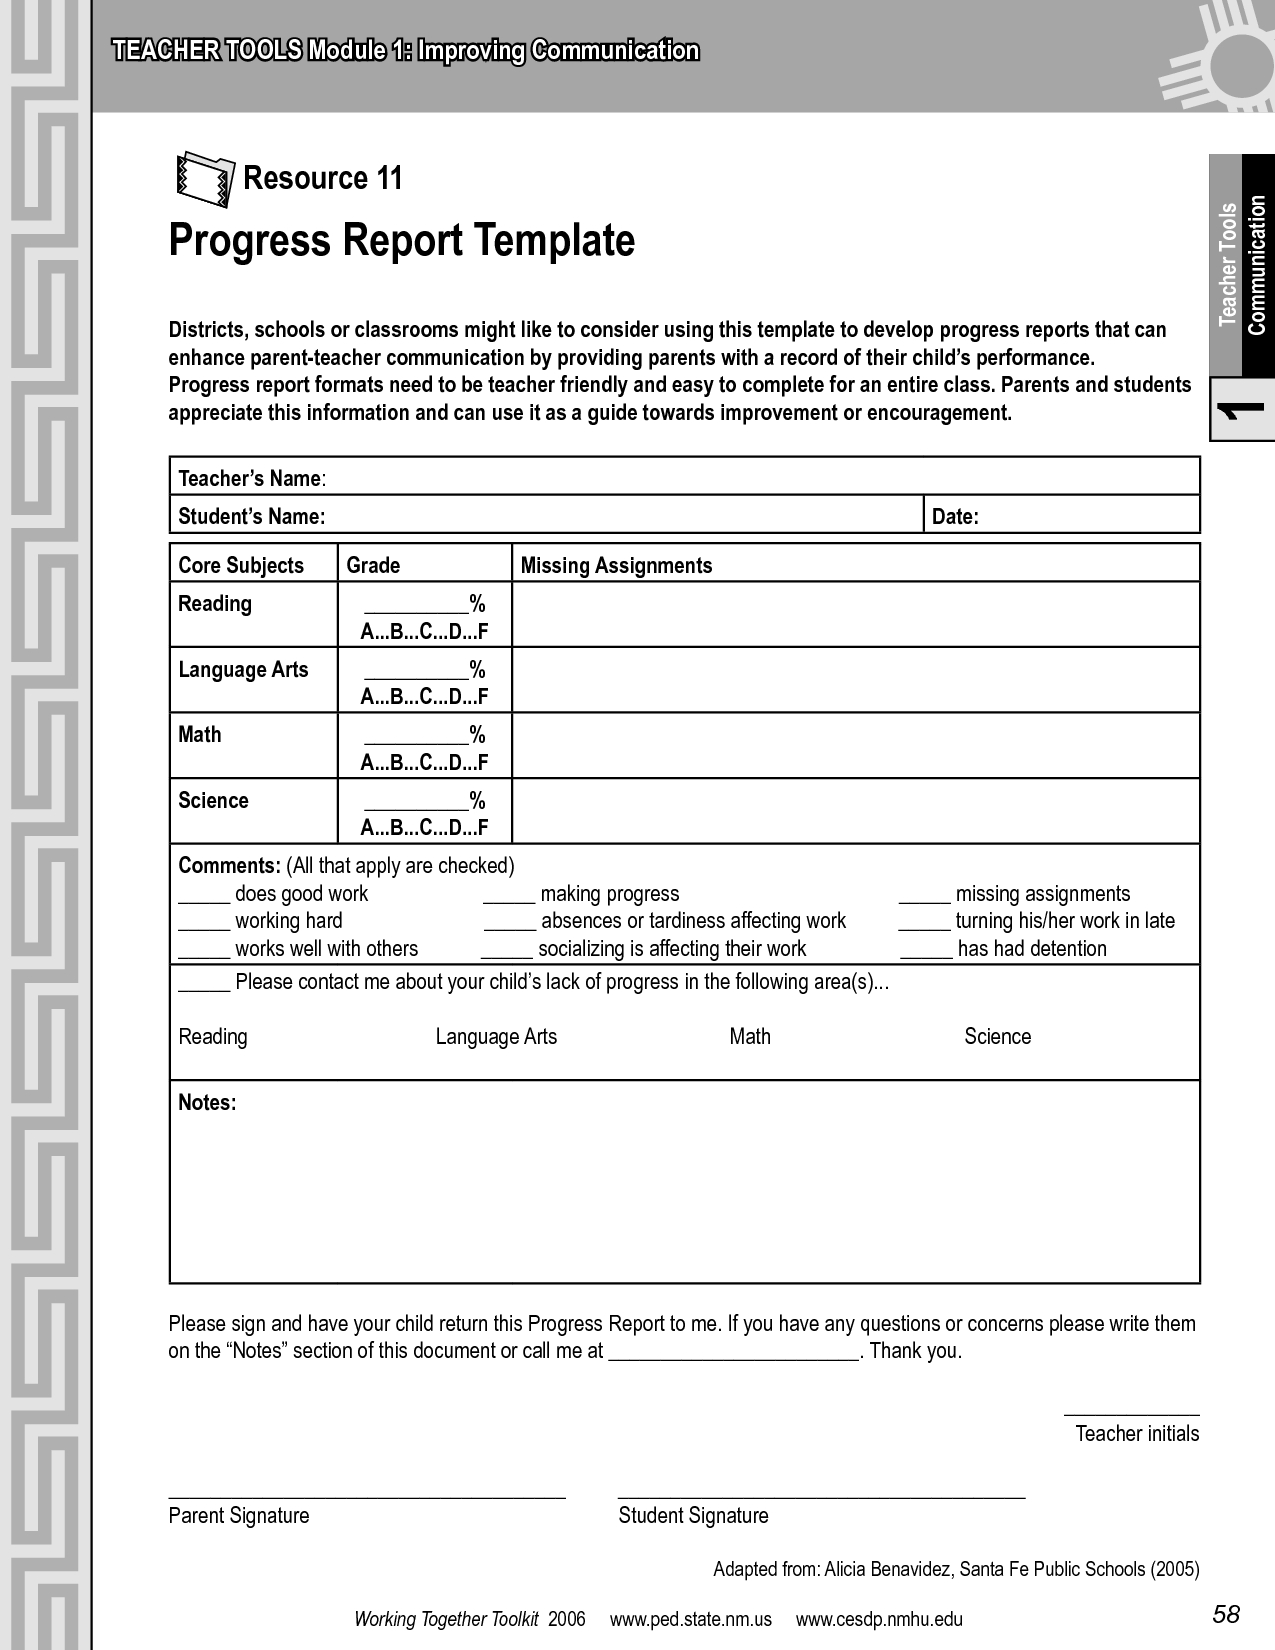 Premium Progress Report Template For Teacherccx13760 For High School Progress Report Template